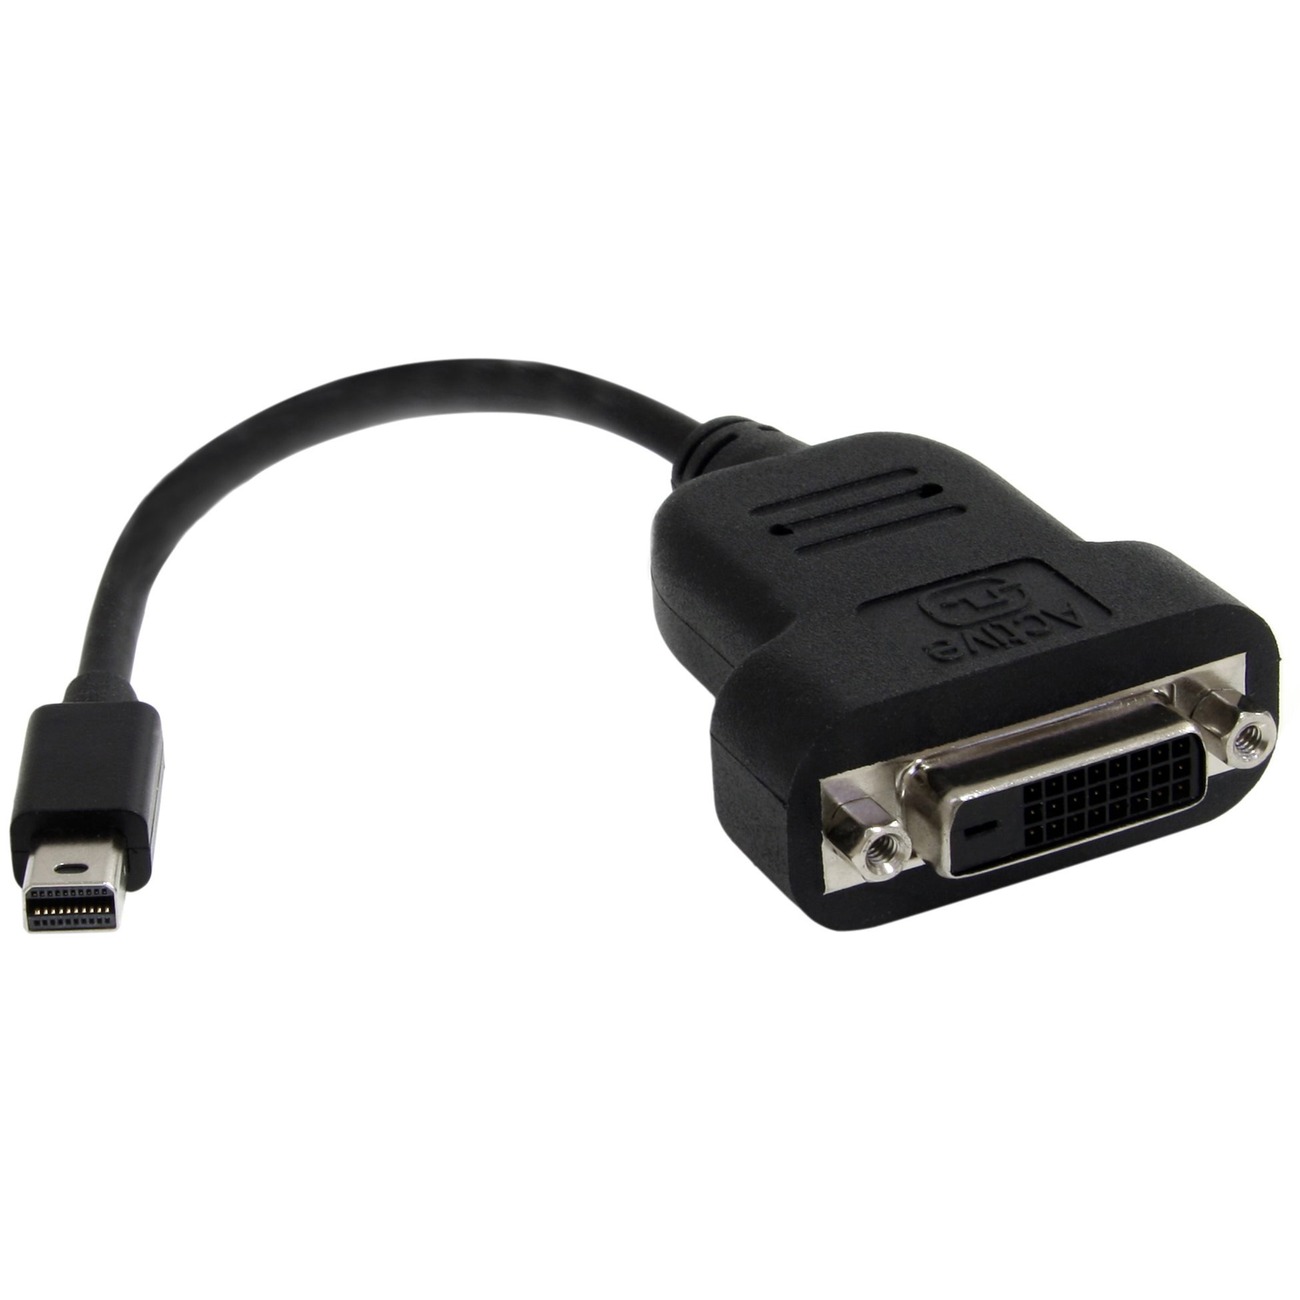 StarTech Displayport To HDMI Video Adapter Converter DP2HDMIADAP